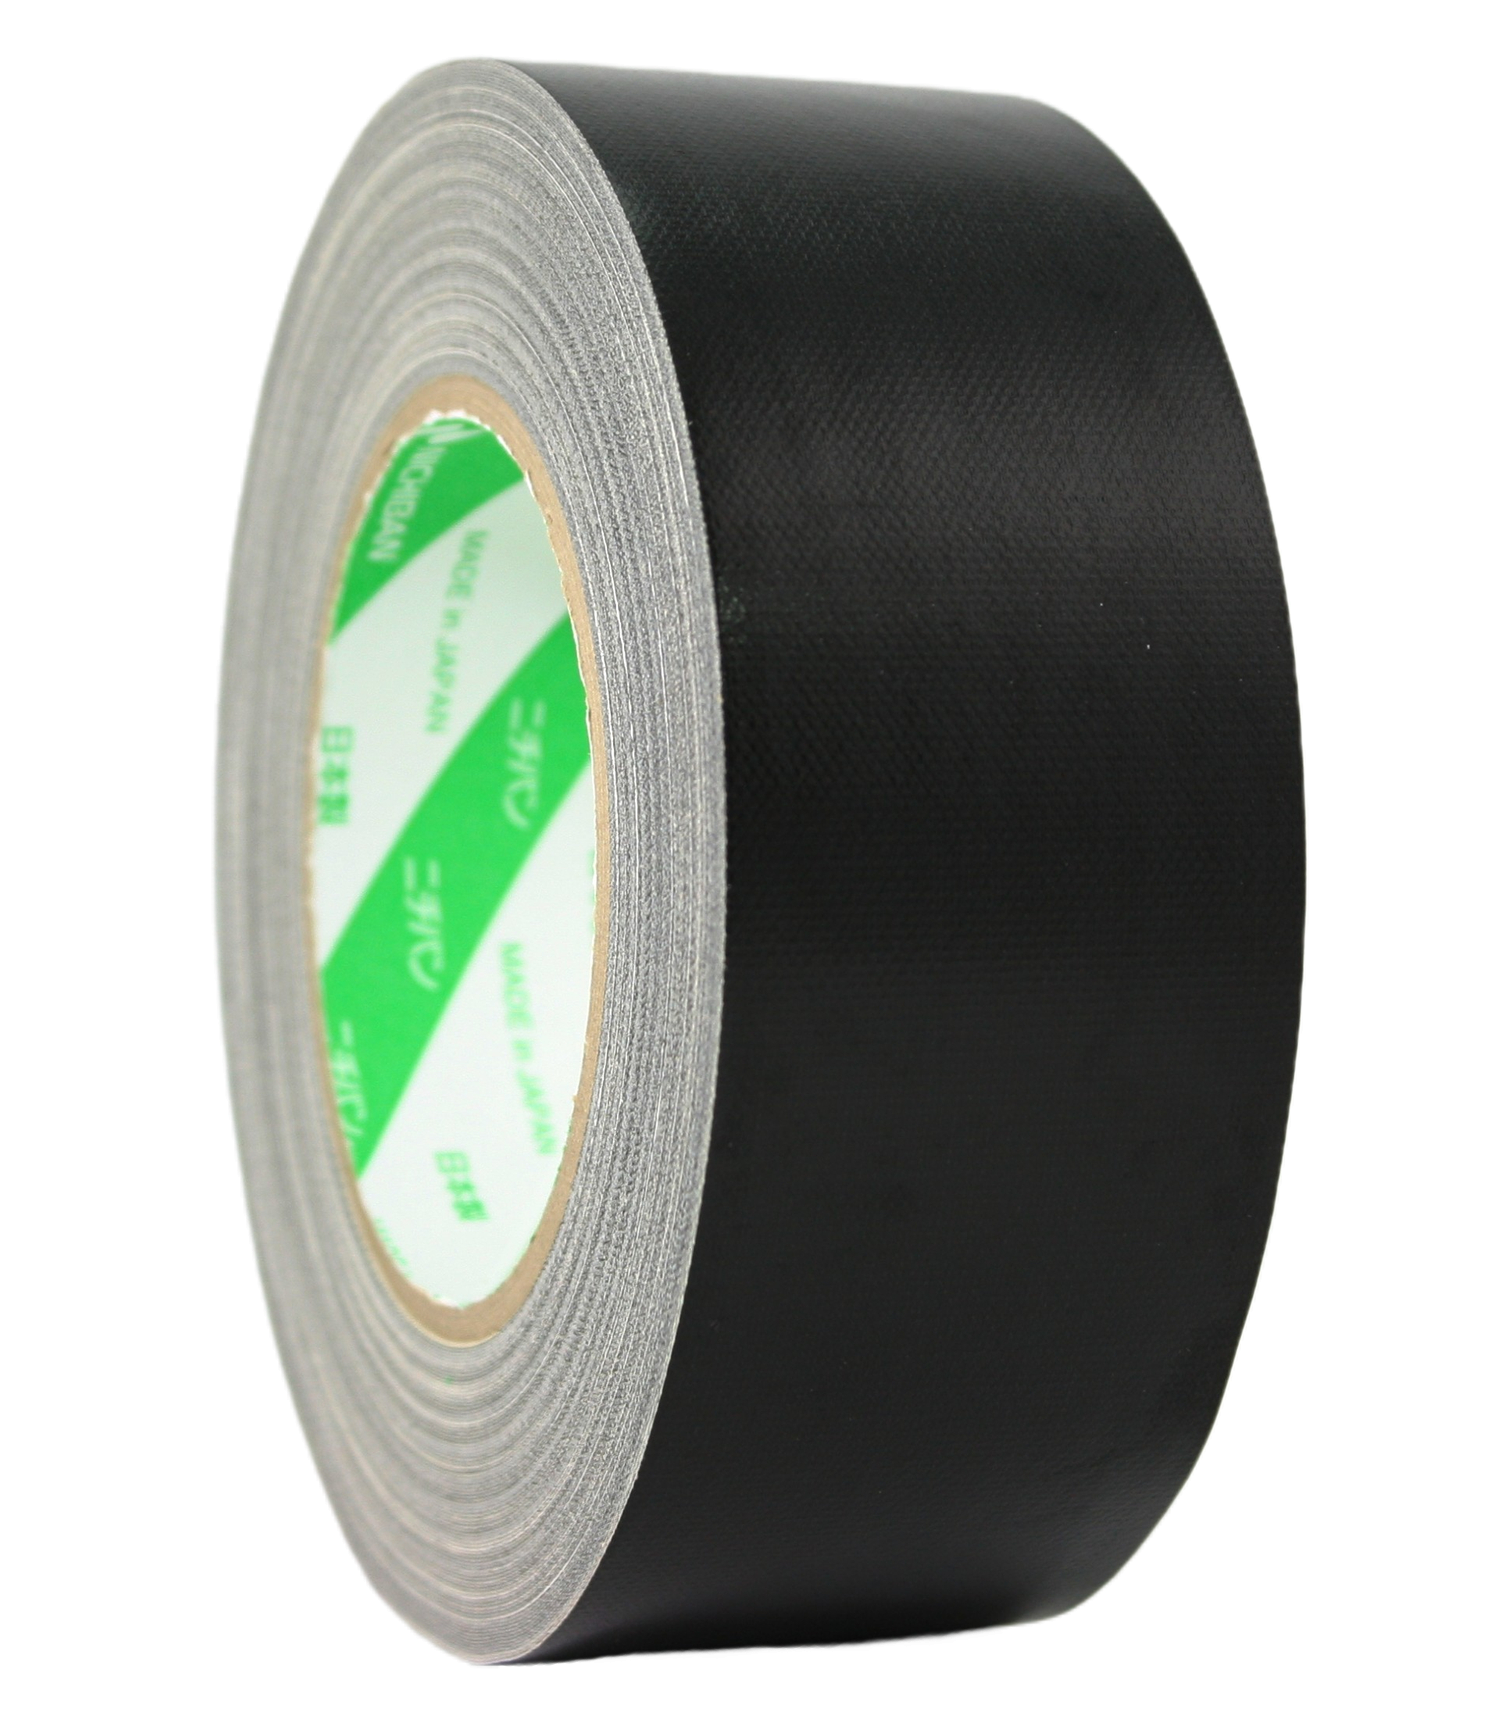 Nichiban Black Gaff Tape, 2" roll, side view